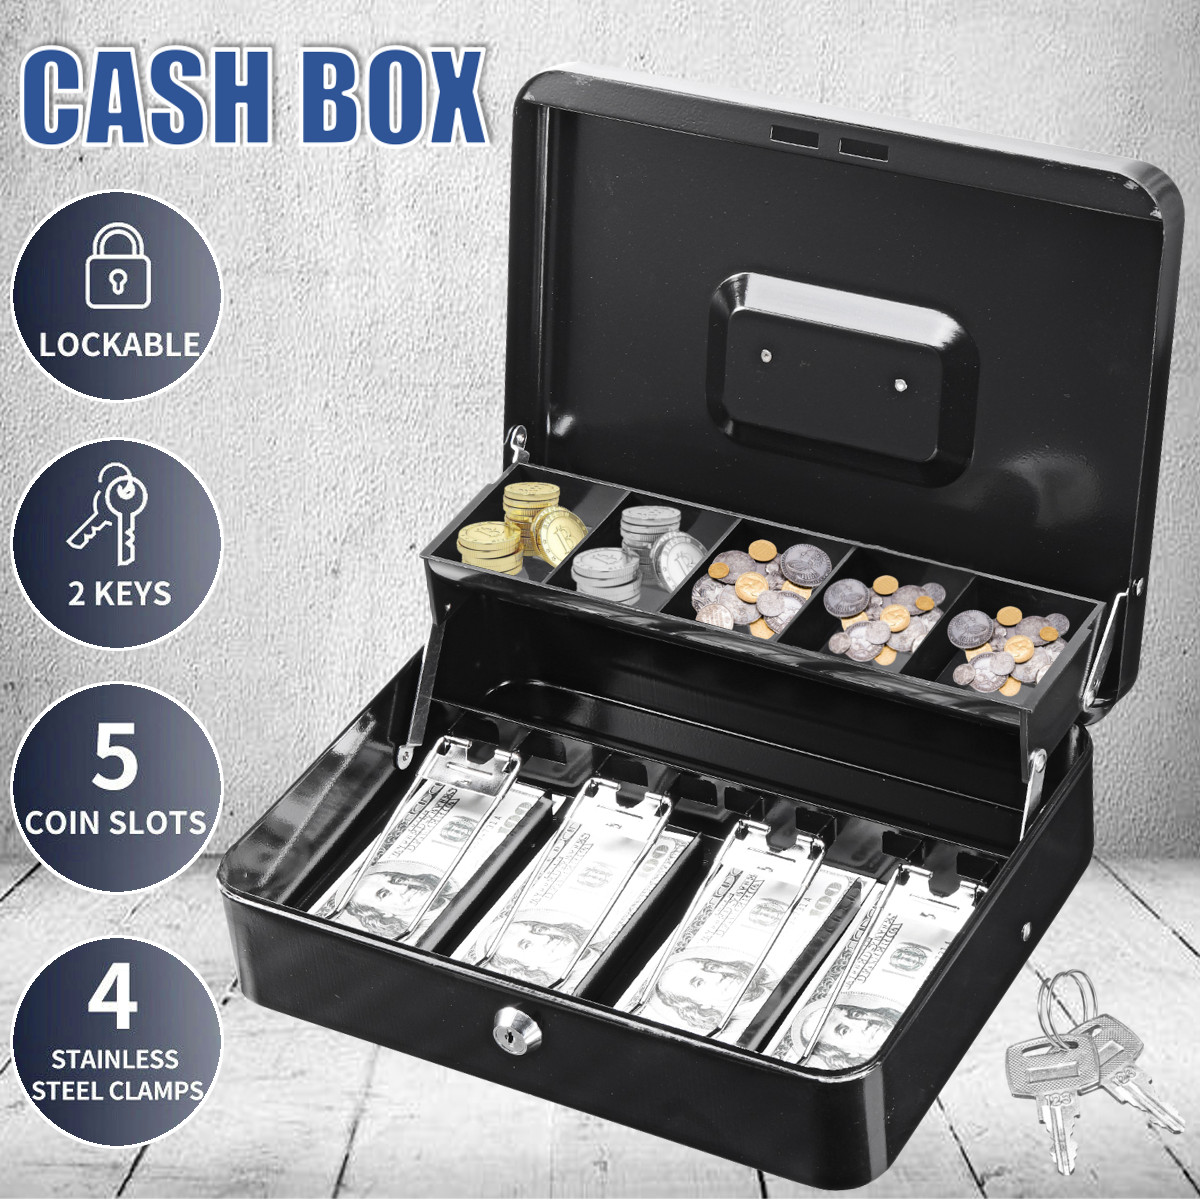 Portable-Cash-Box-Deposit-Slot-Lockable-Money-Coins-Petty-Metal-Case-with-2-Keys-1752217-1